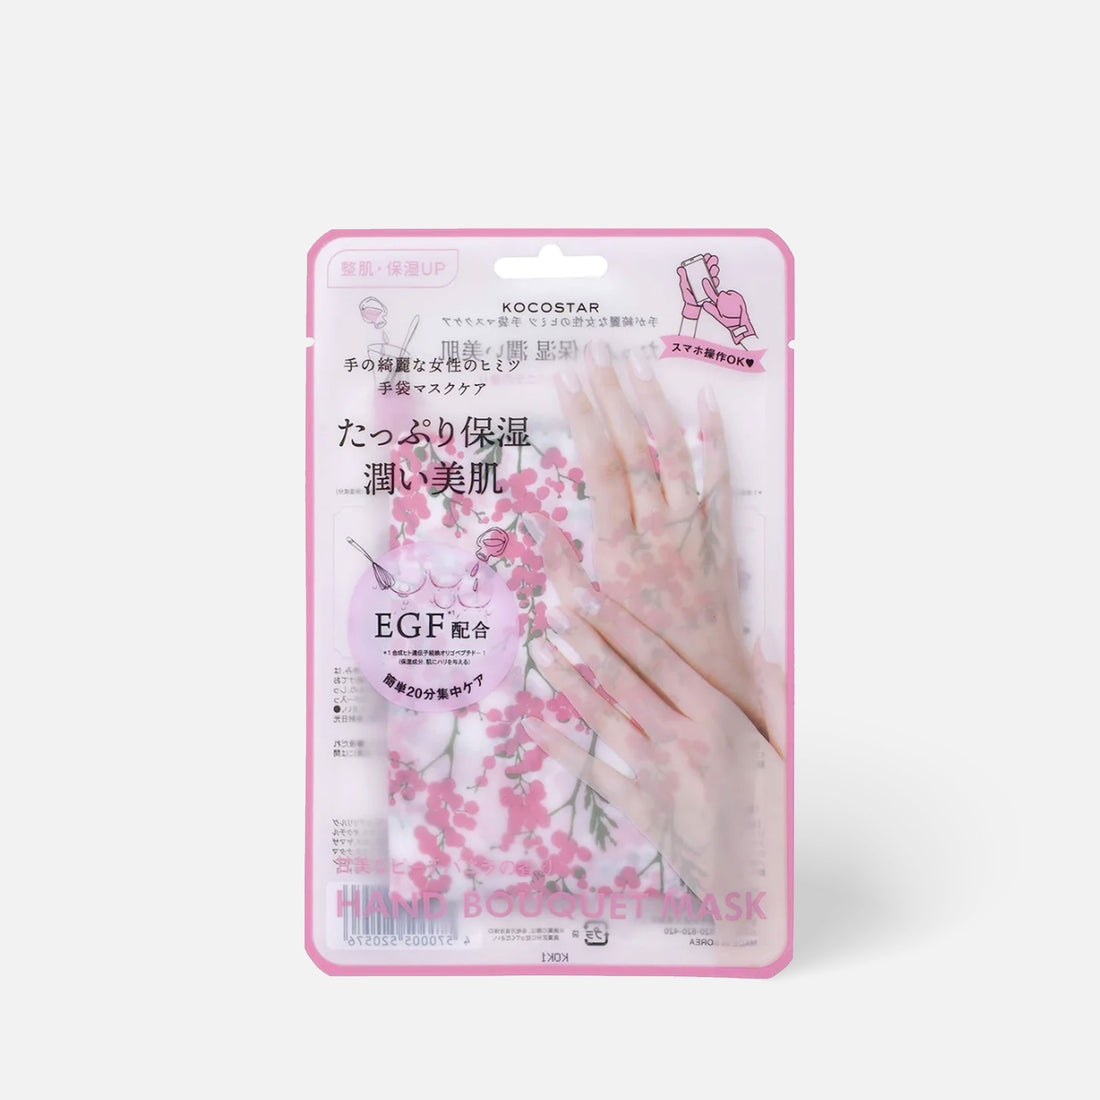 KOCOSTAR HandMask Pink 1pc